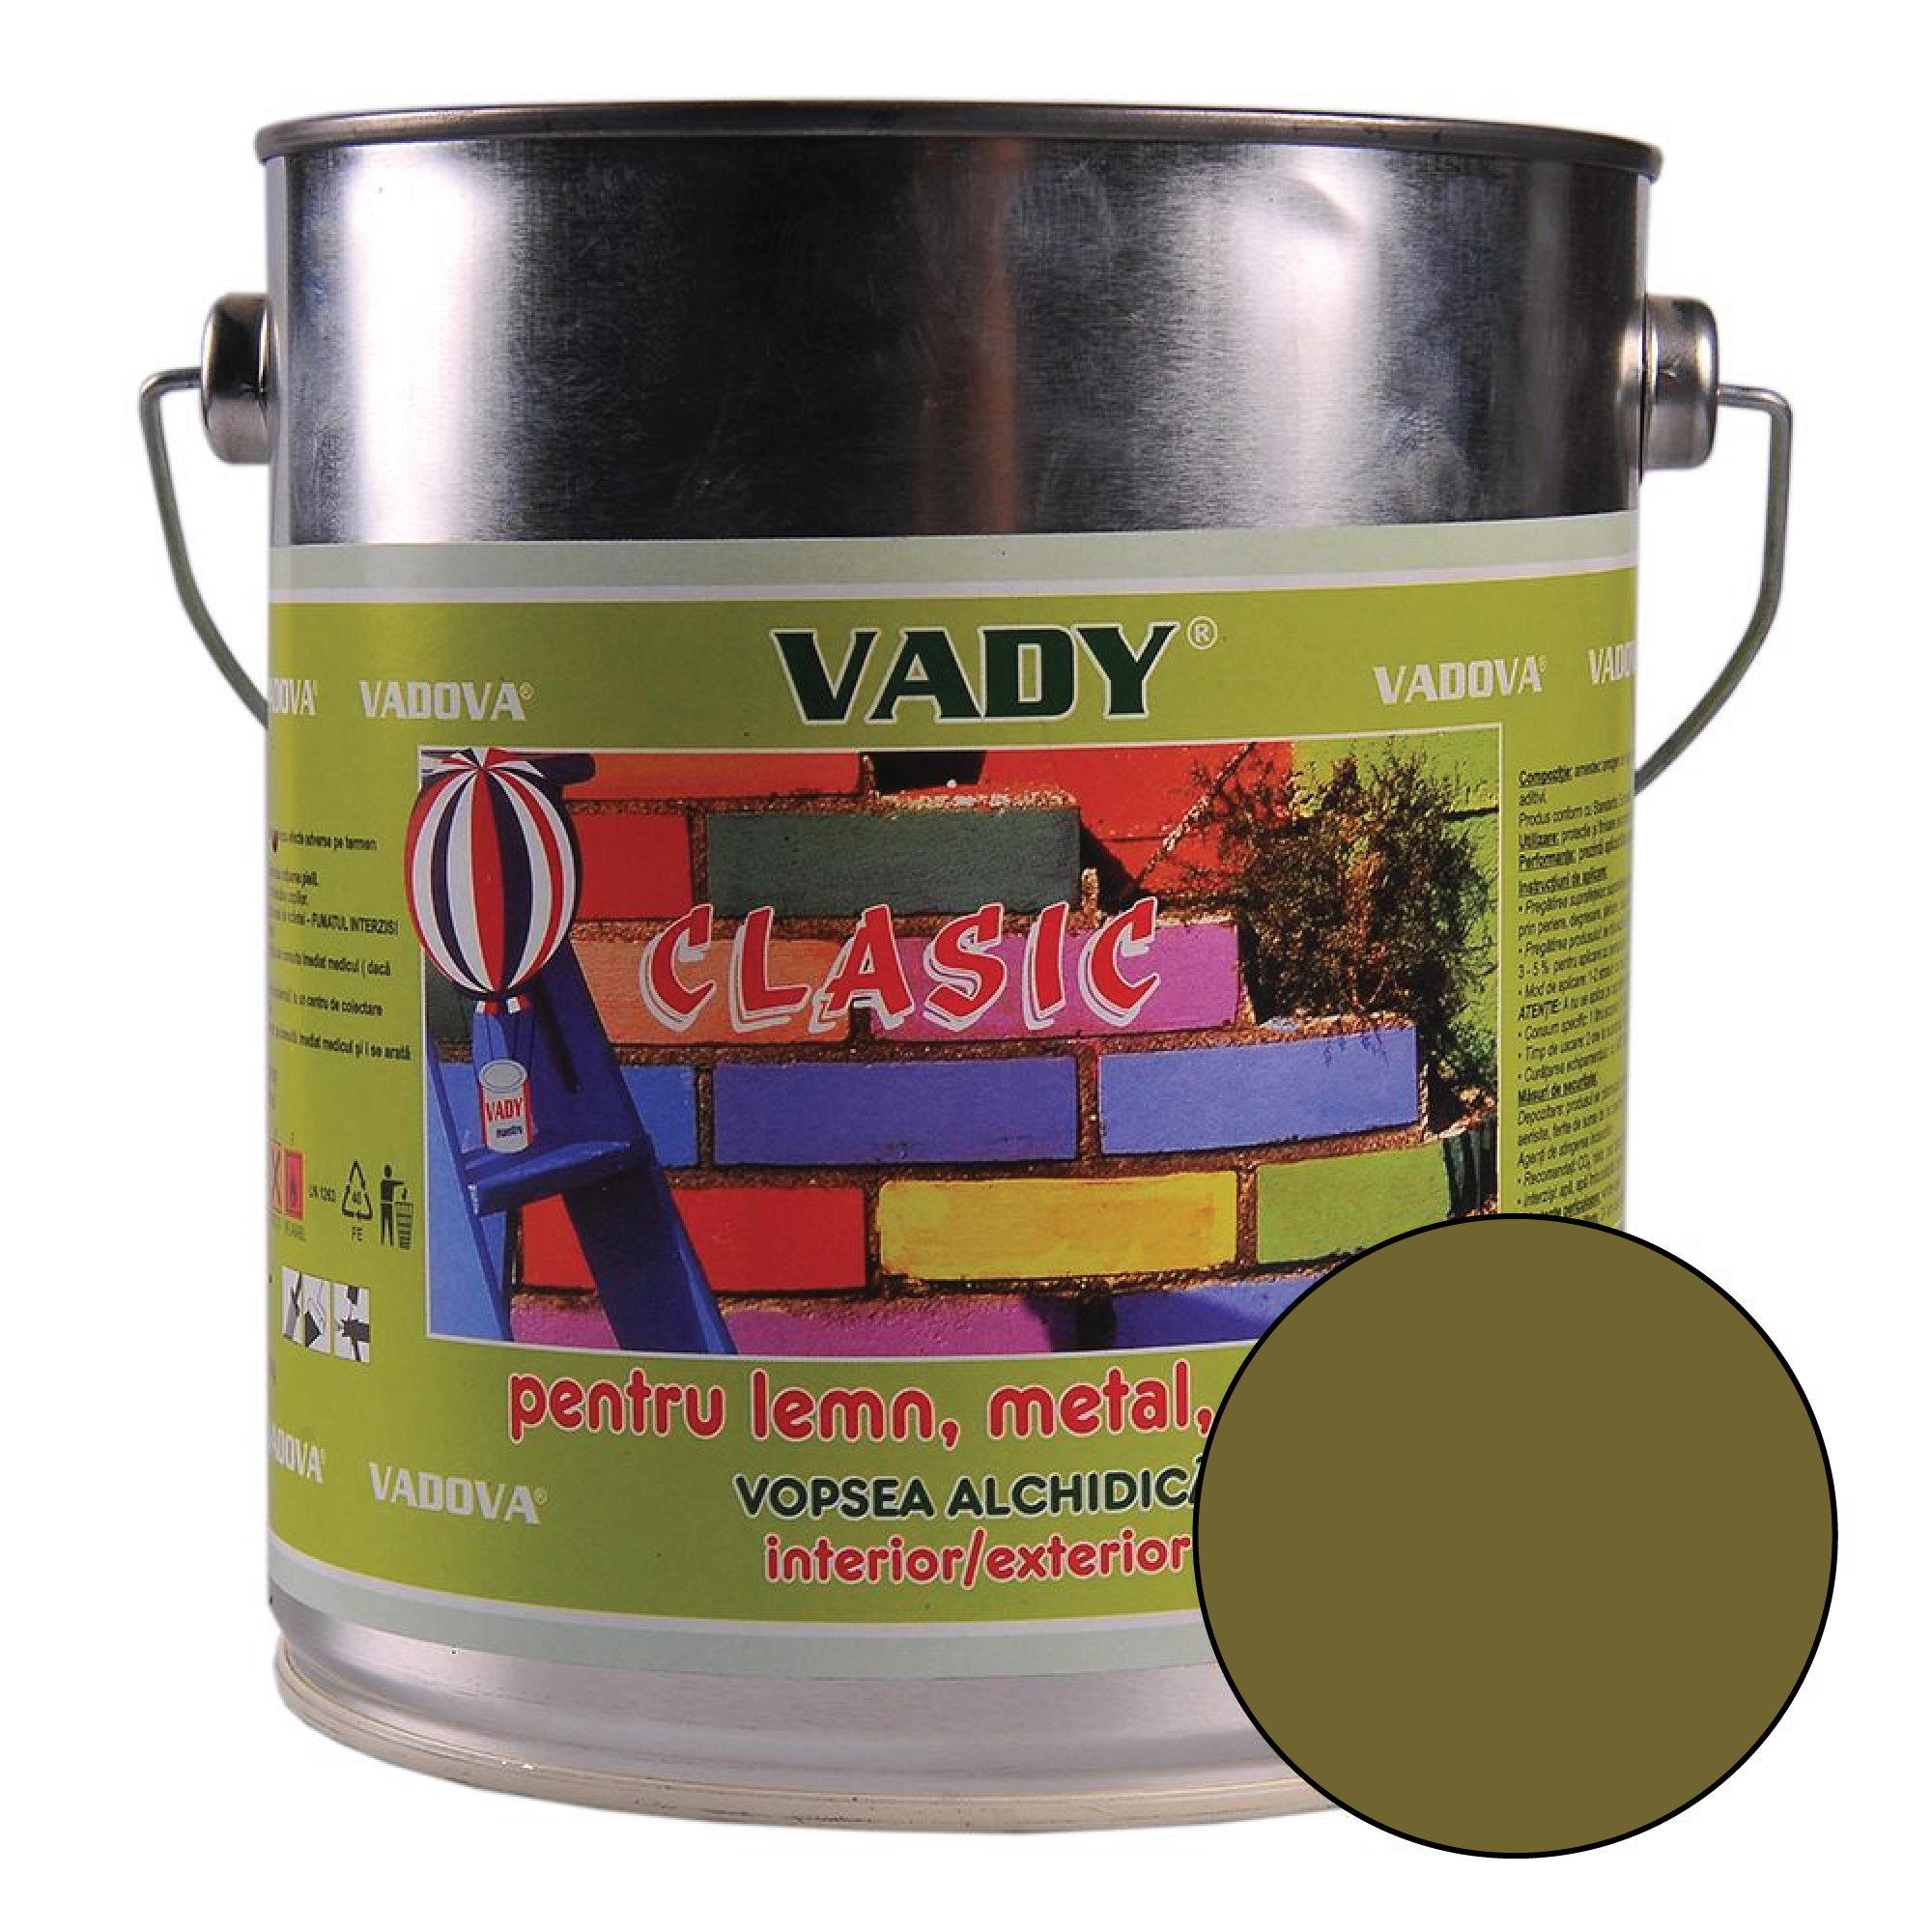 Vopsea alchidica Vady clasic, pentru lemn/metal/zidarie, interior/exterior, kaki, 3 kg alchidica